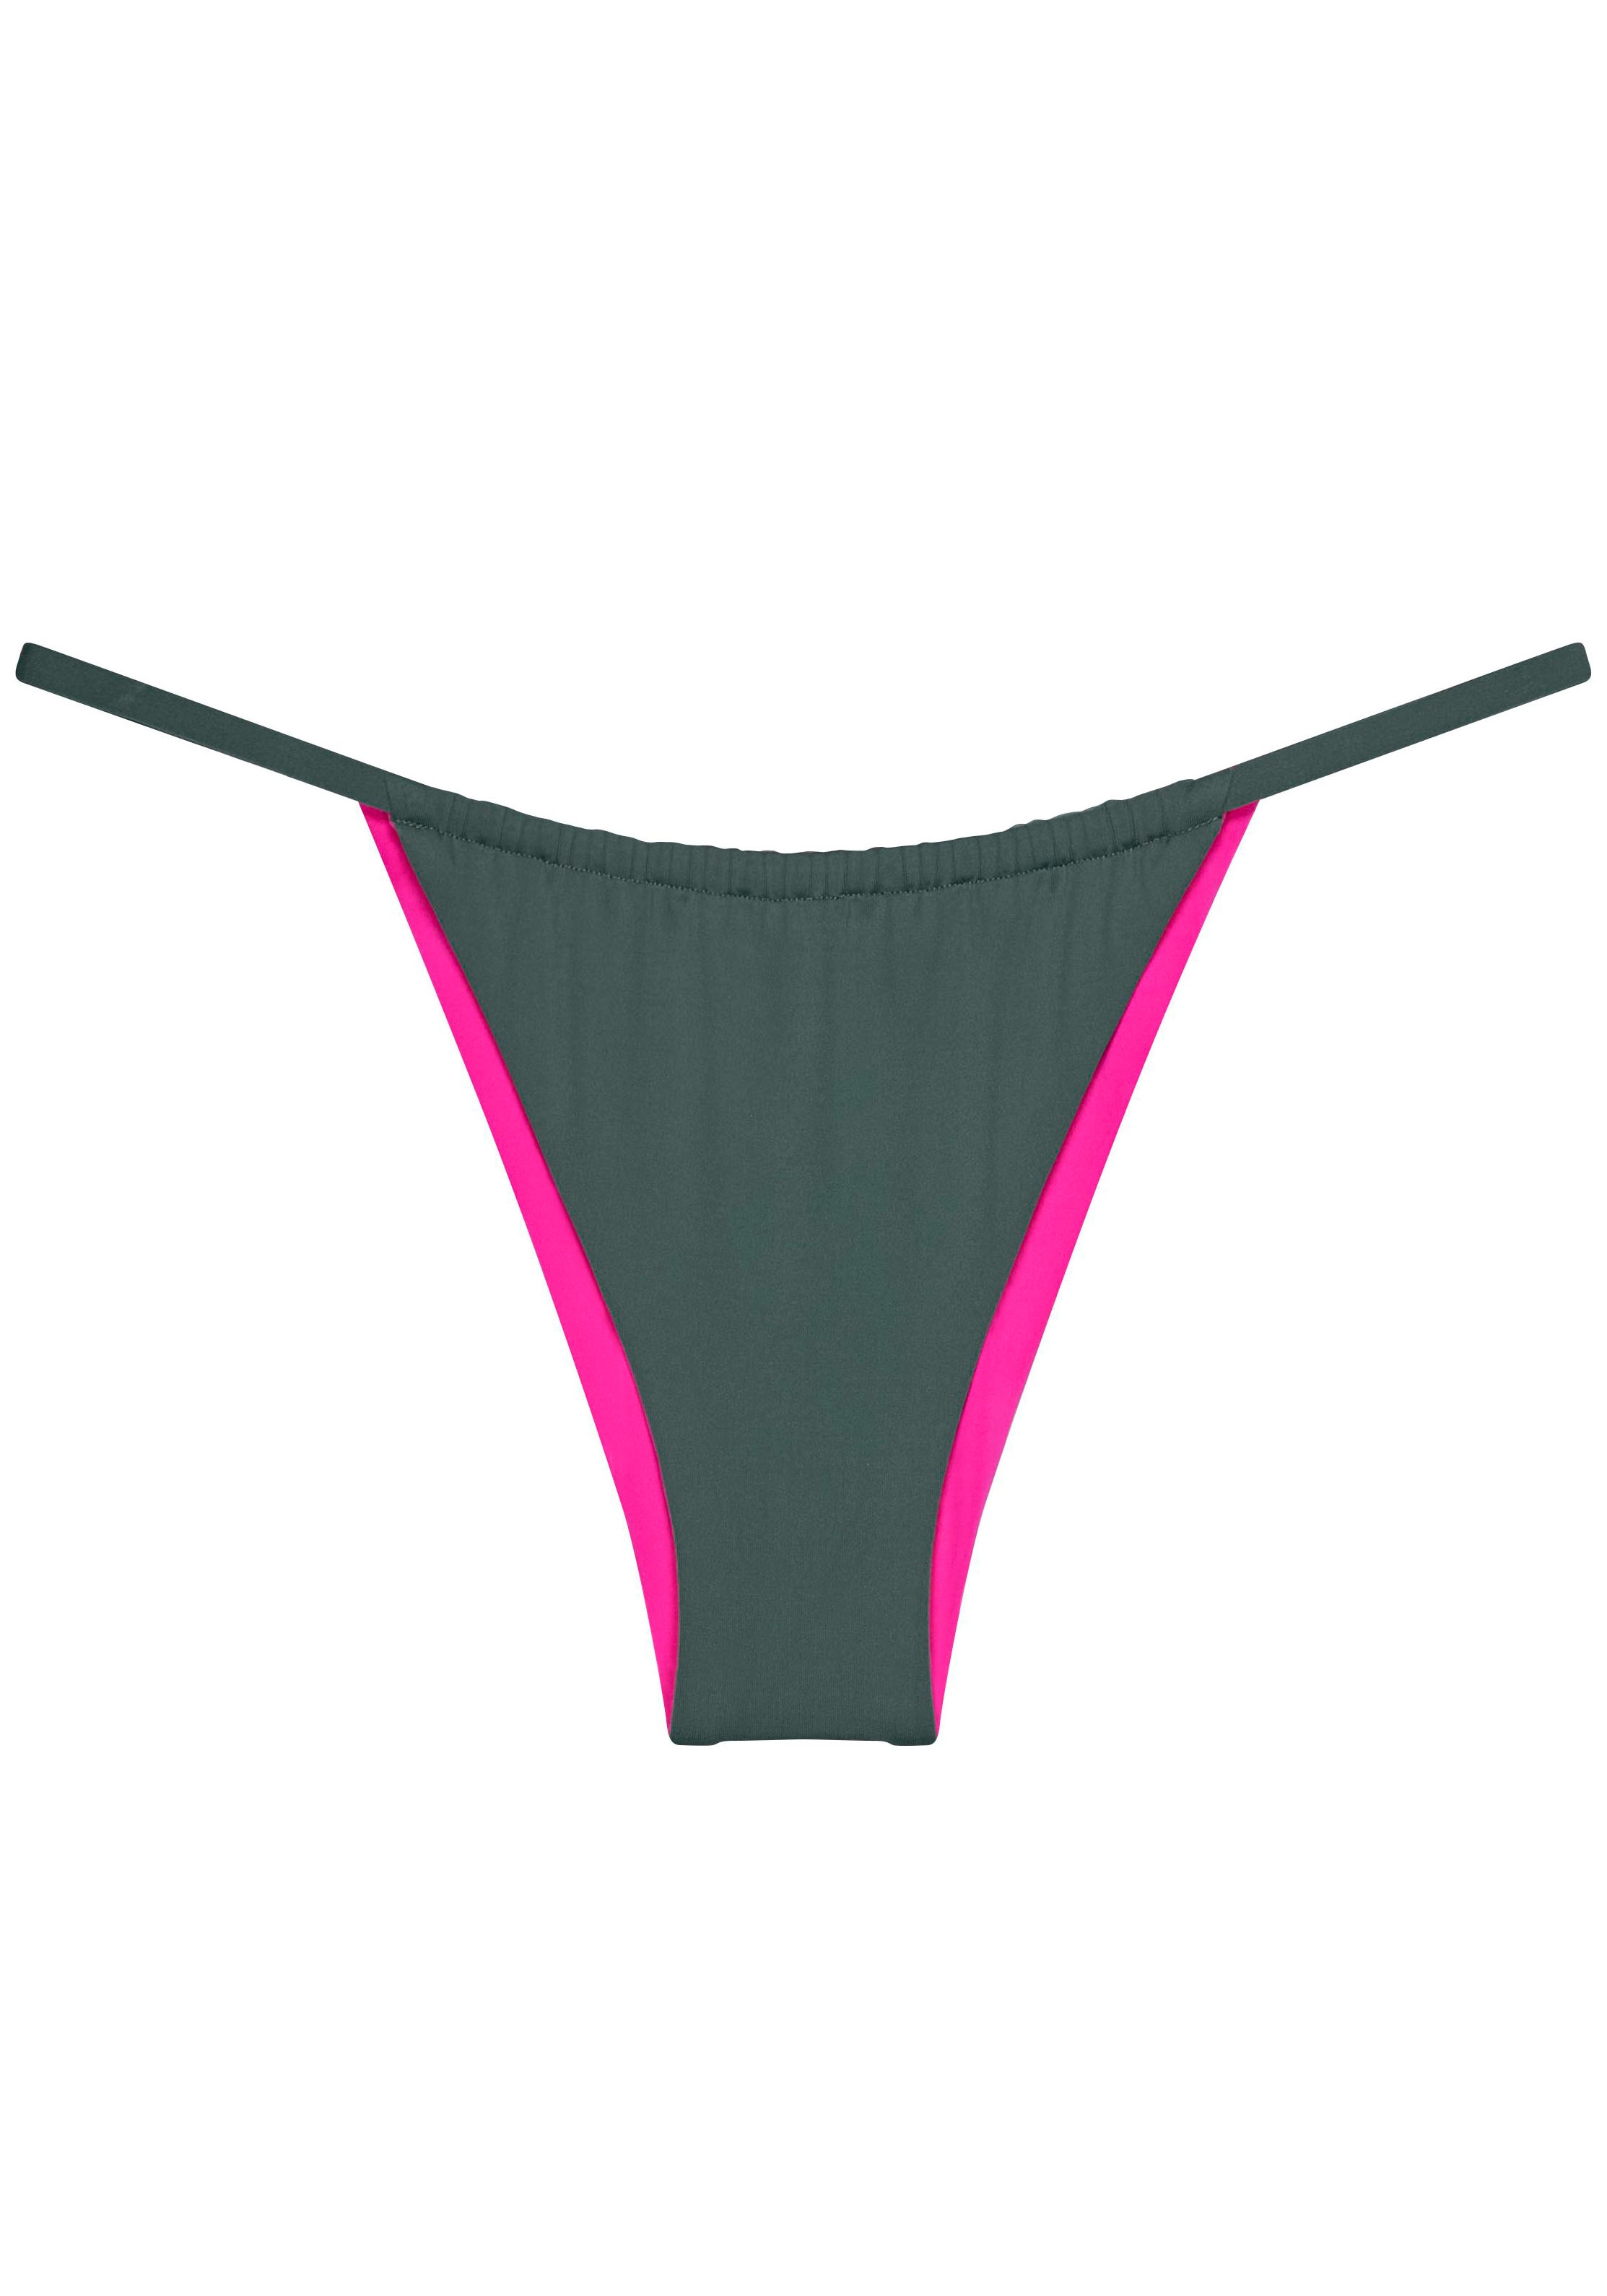 Triumph Bikini-Hose »Free Smart Brazil sd«, ein Style zwei Farben, 2-in-1 Bikinislip beidseitig tragbar